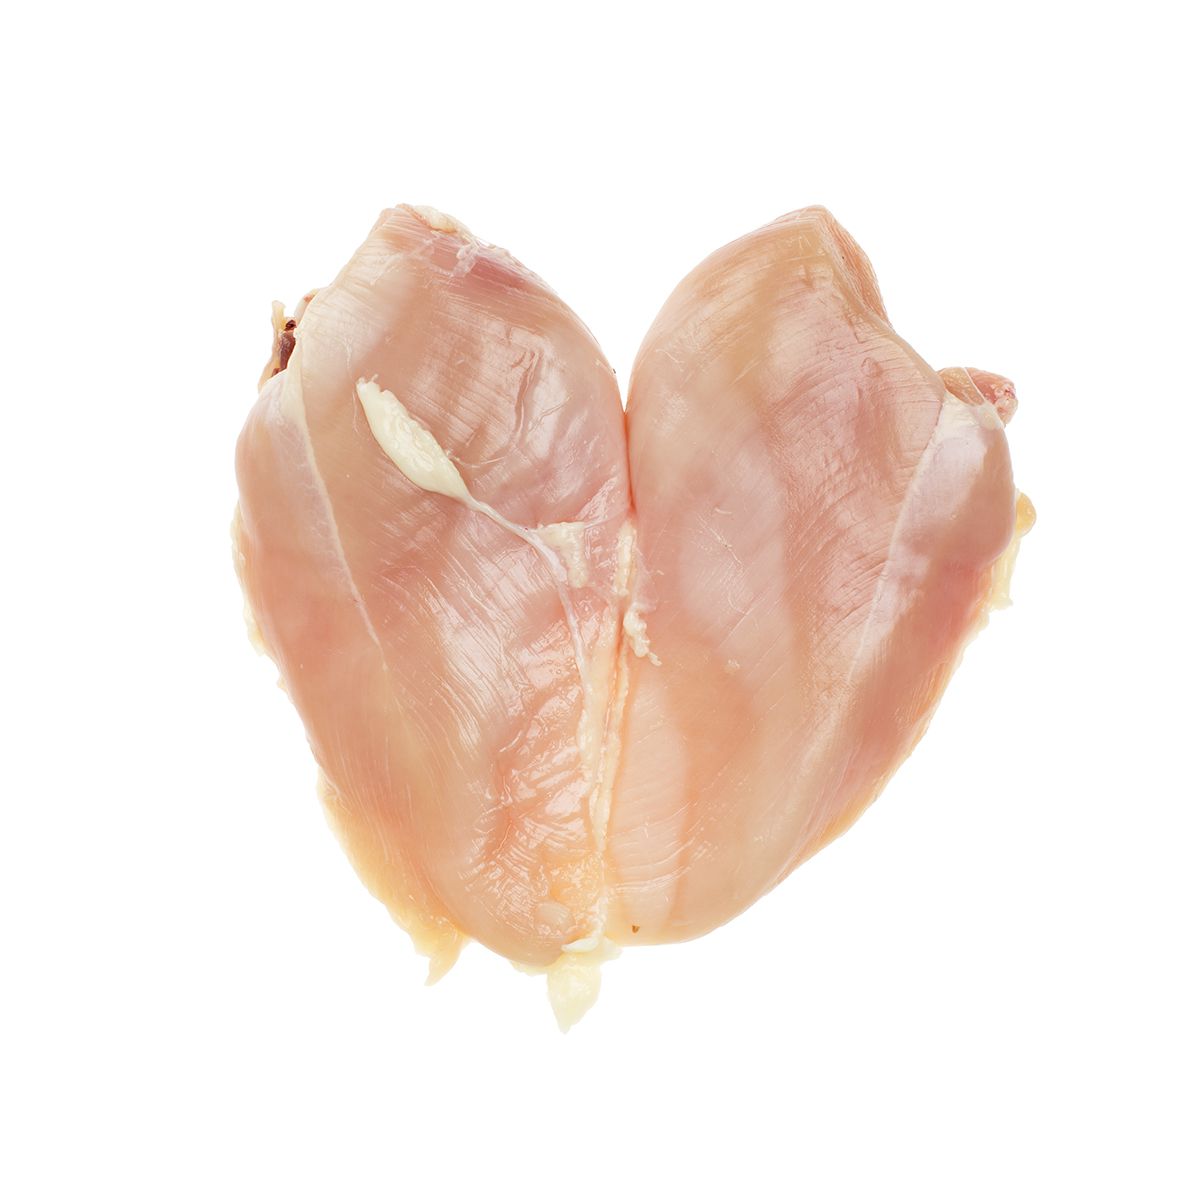 Senat Poultry ABF Halal Boneless Skinless Chicken Breasts